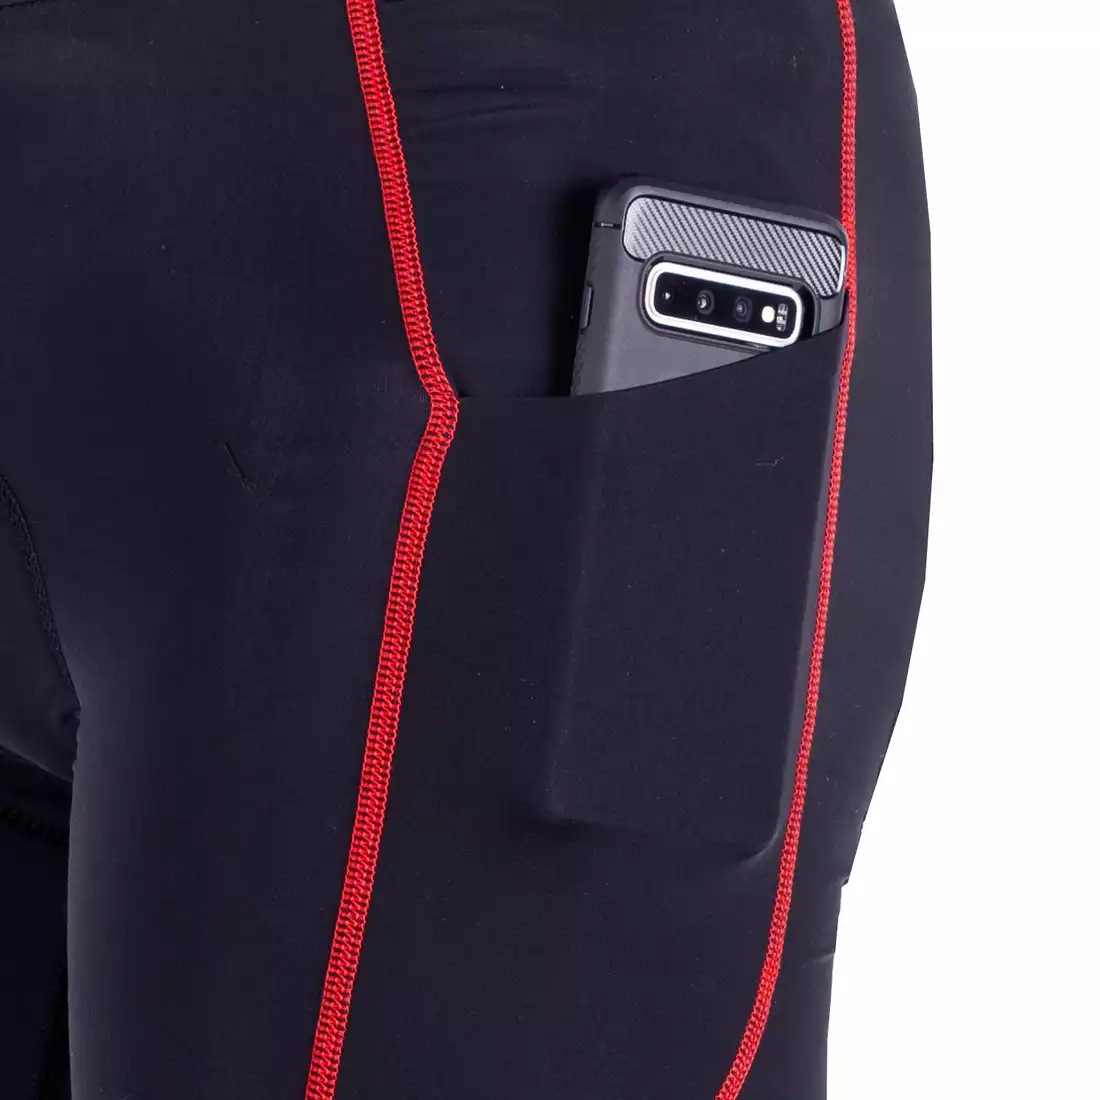 DEKO POCKET men's cycling shorts, black-red